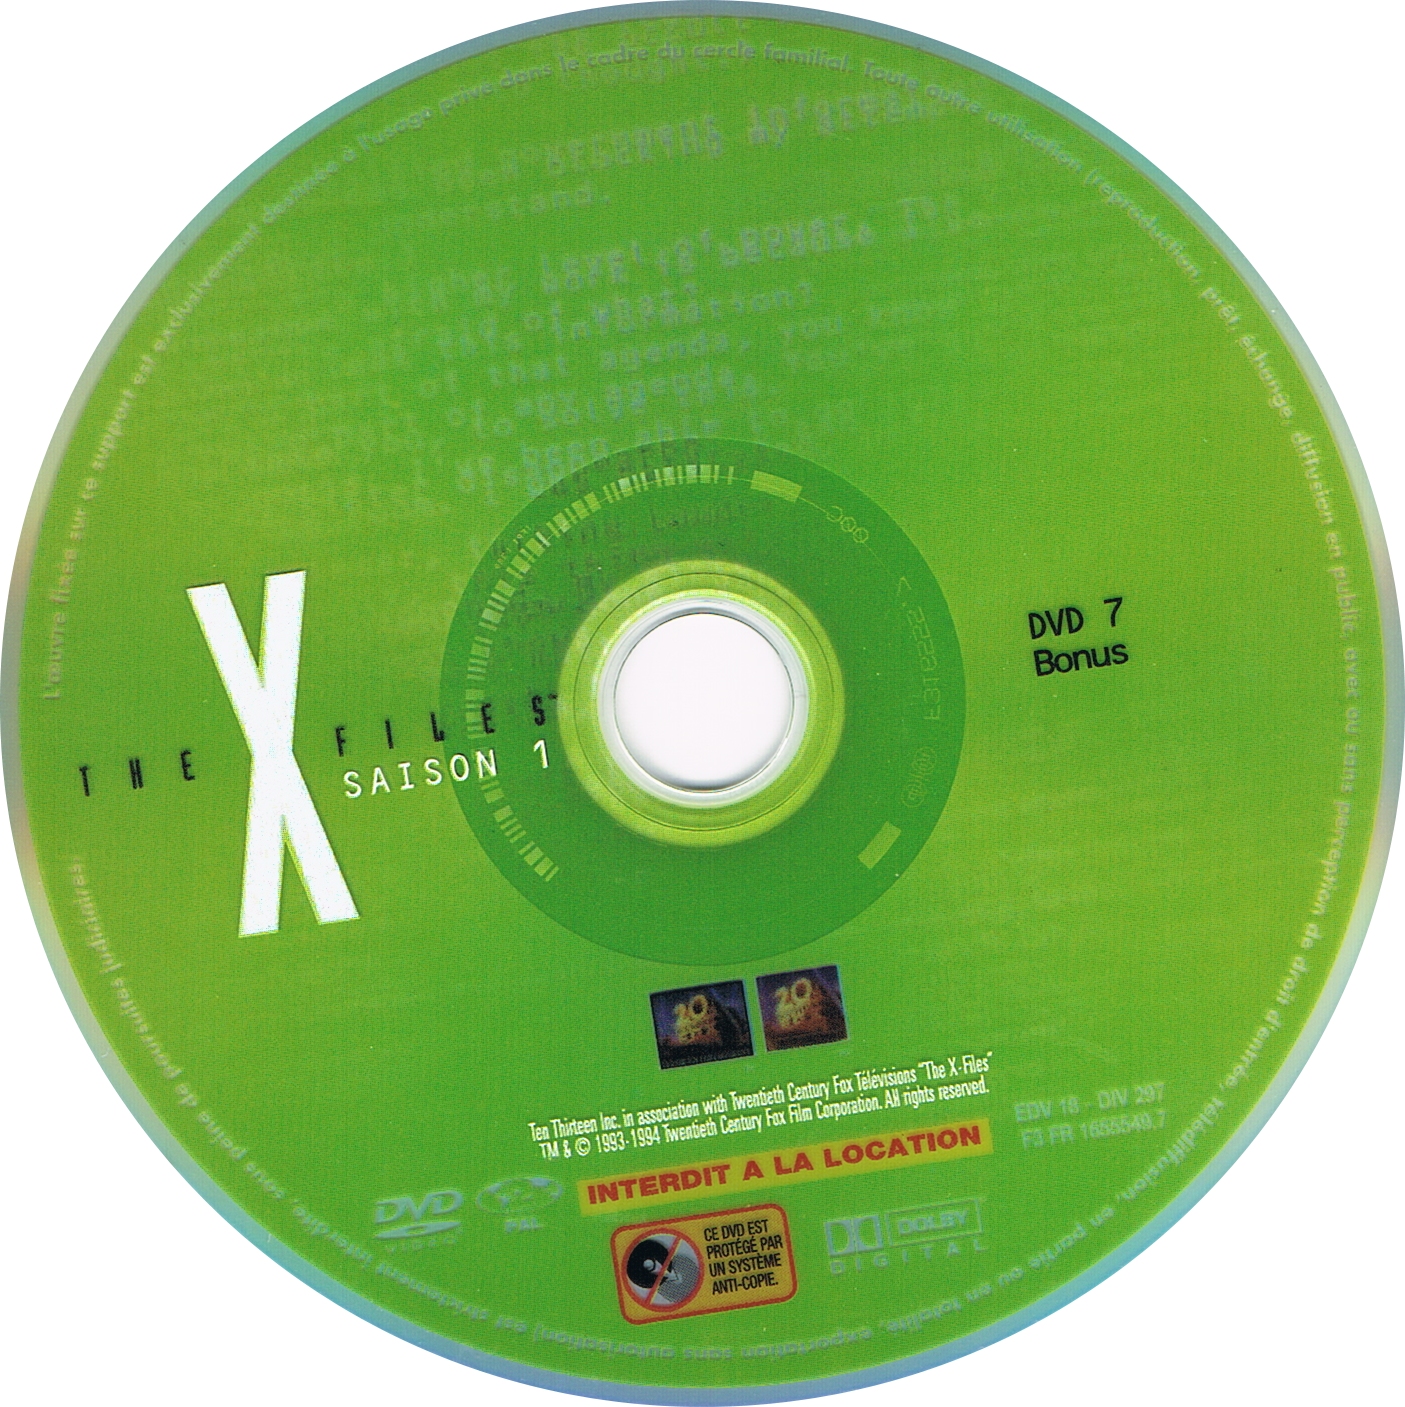 The X Files Saison 1 DVD 7